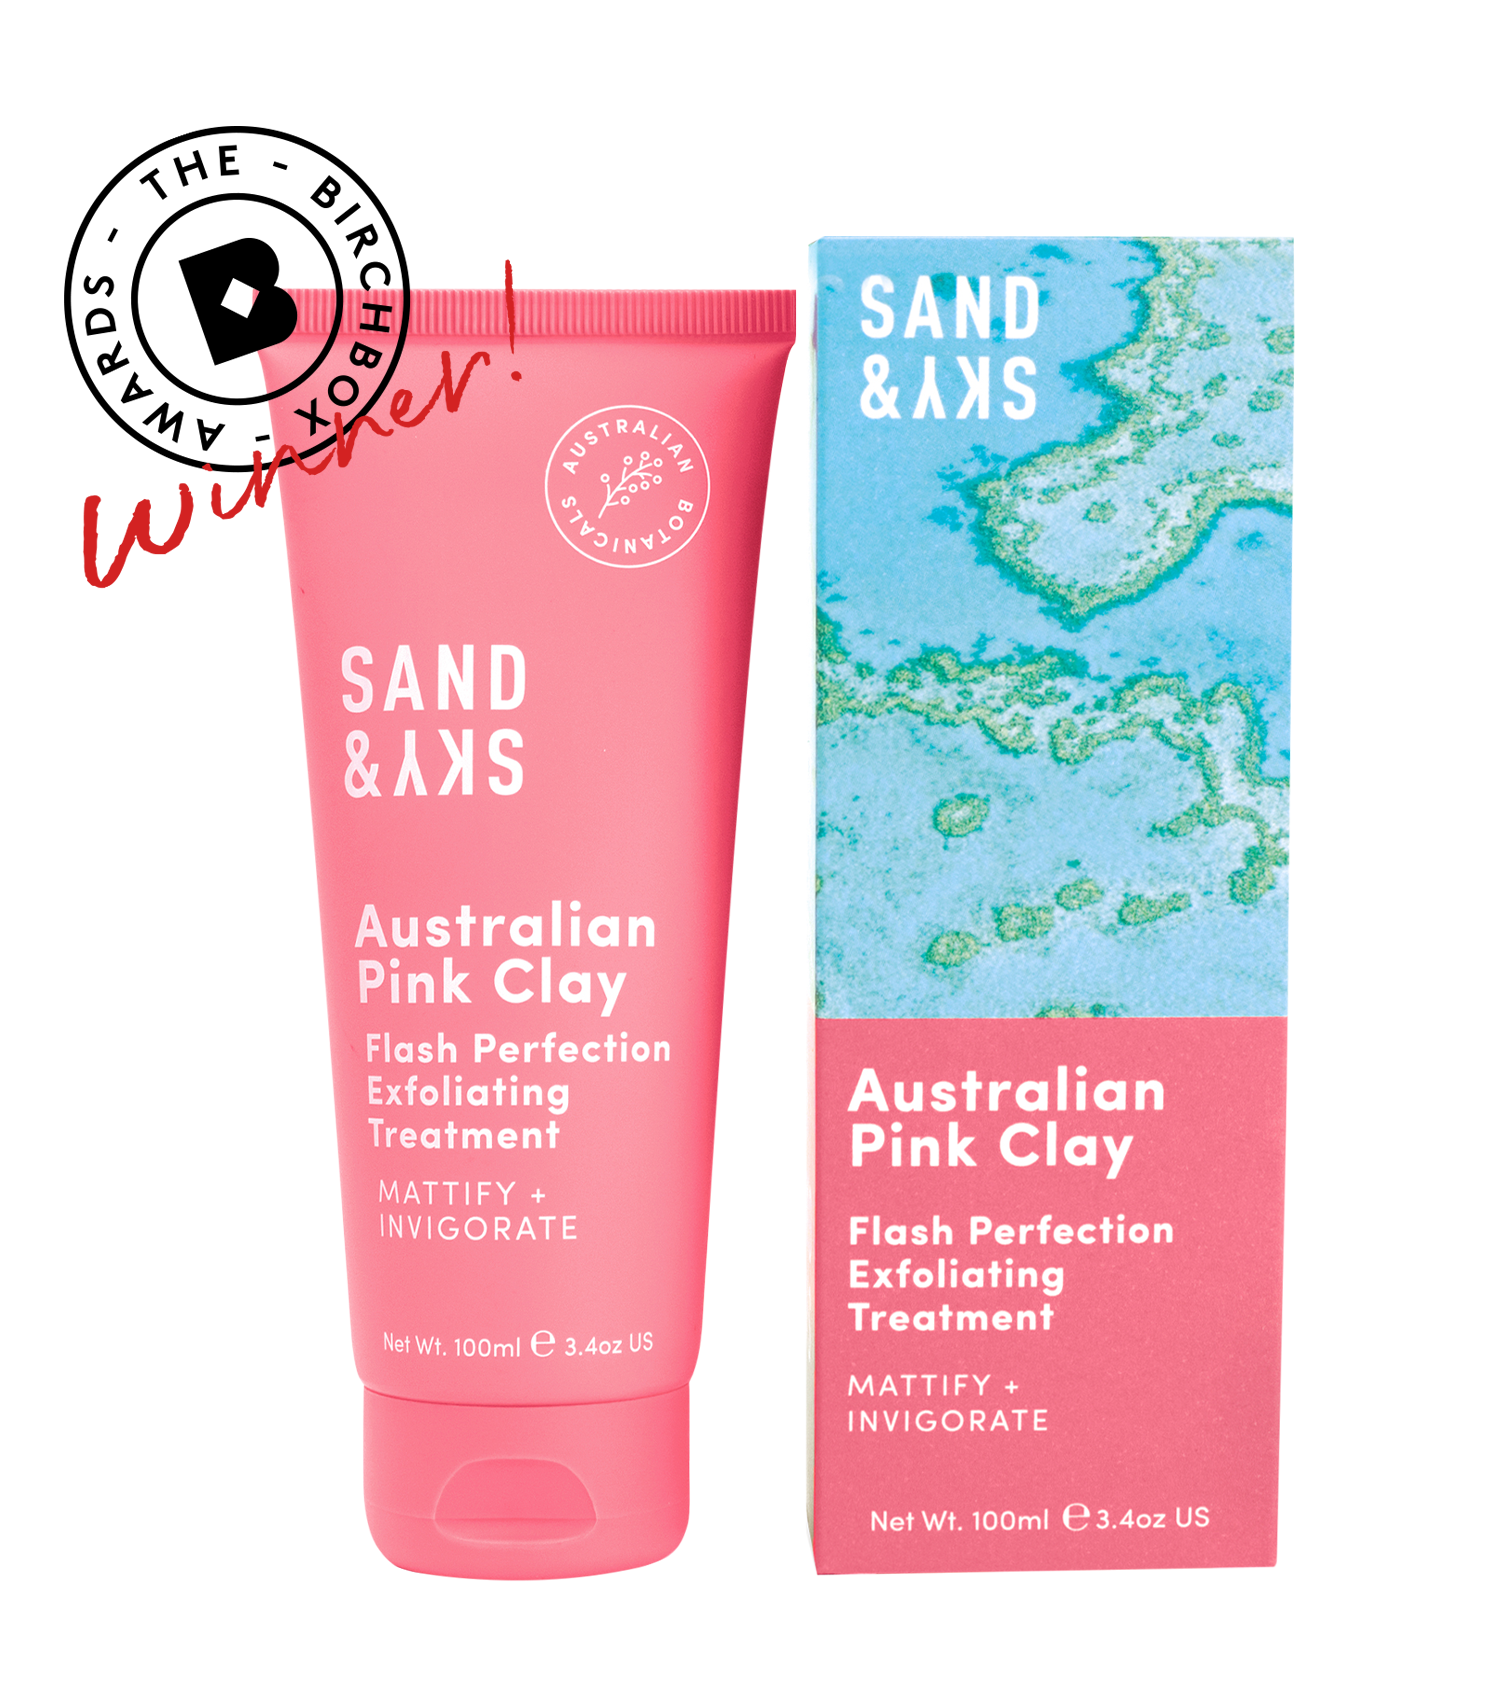 SAND & SKY Australian Pink Clay - Flash Perfection Exfoliating Treatment SAND & SKY Australian Pink Clay - Flash Perfection Exfoliating Treatment 1